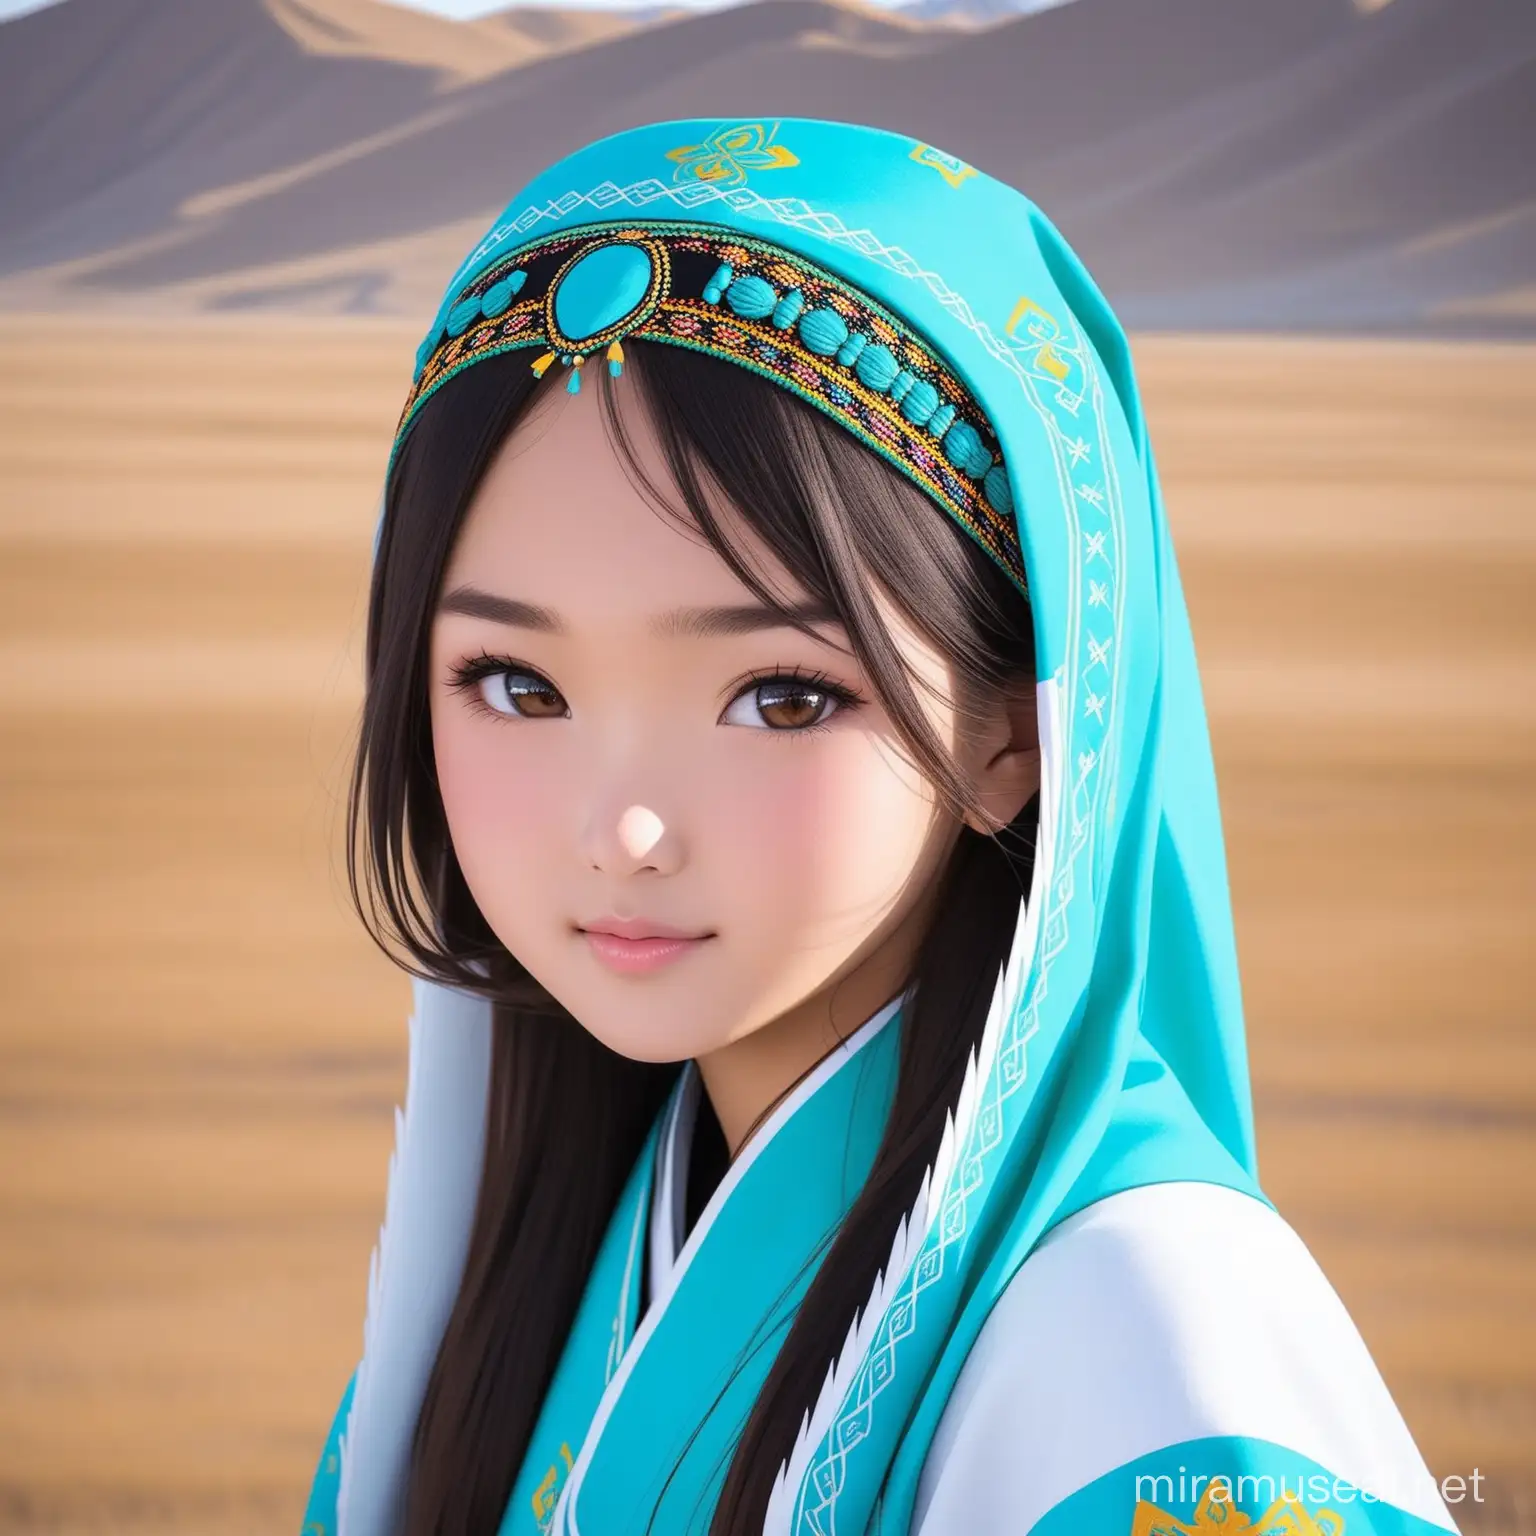 Traditional Kazakh Girl in Vibrant Attire